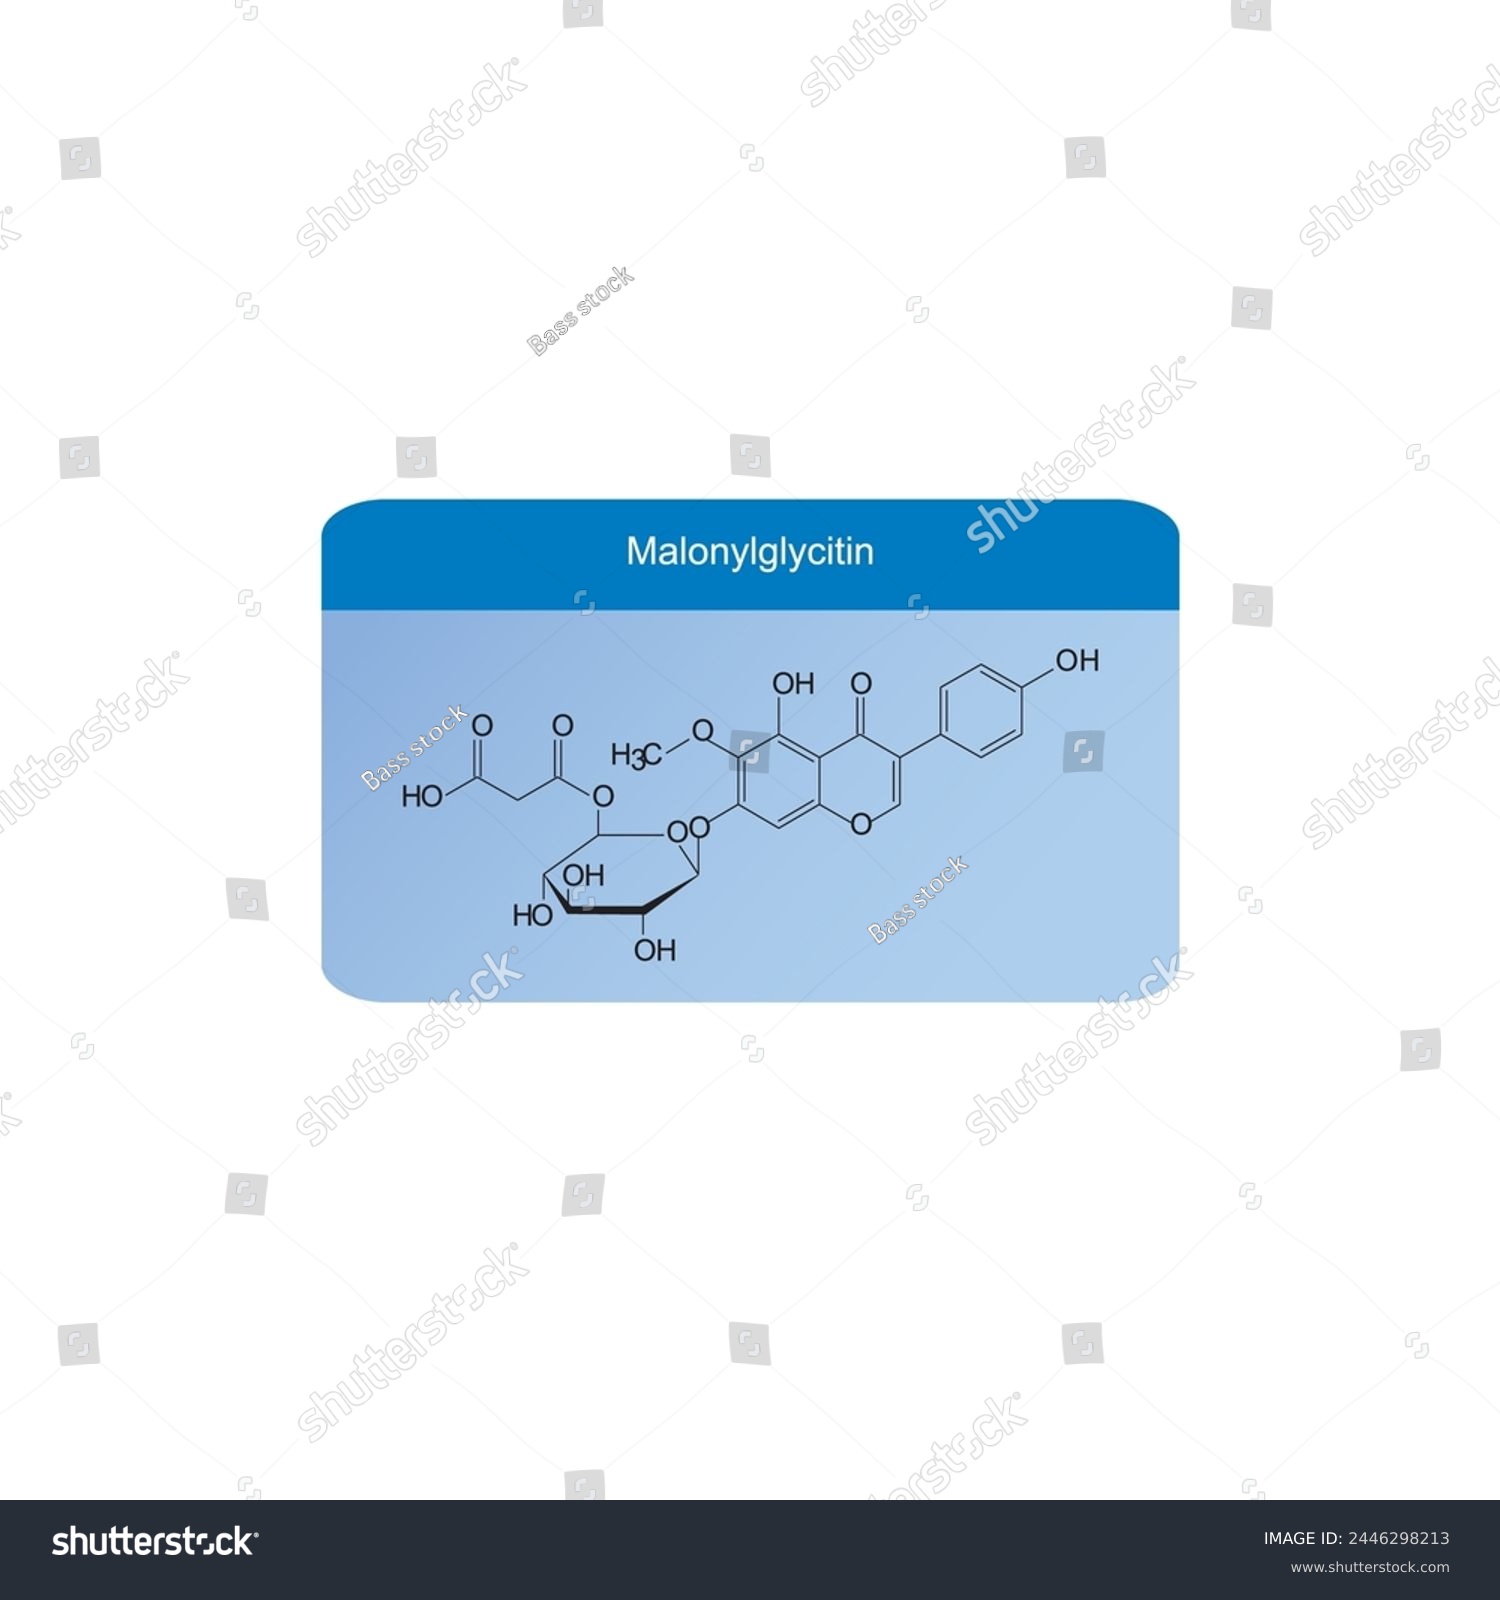 SVG of Malonylglycitin skeletal structure diagram. compound molecule scientific illustration on blue background. svg